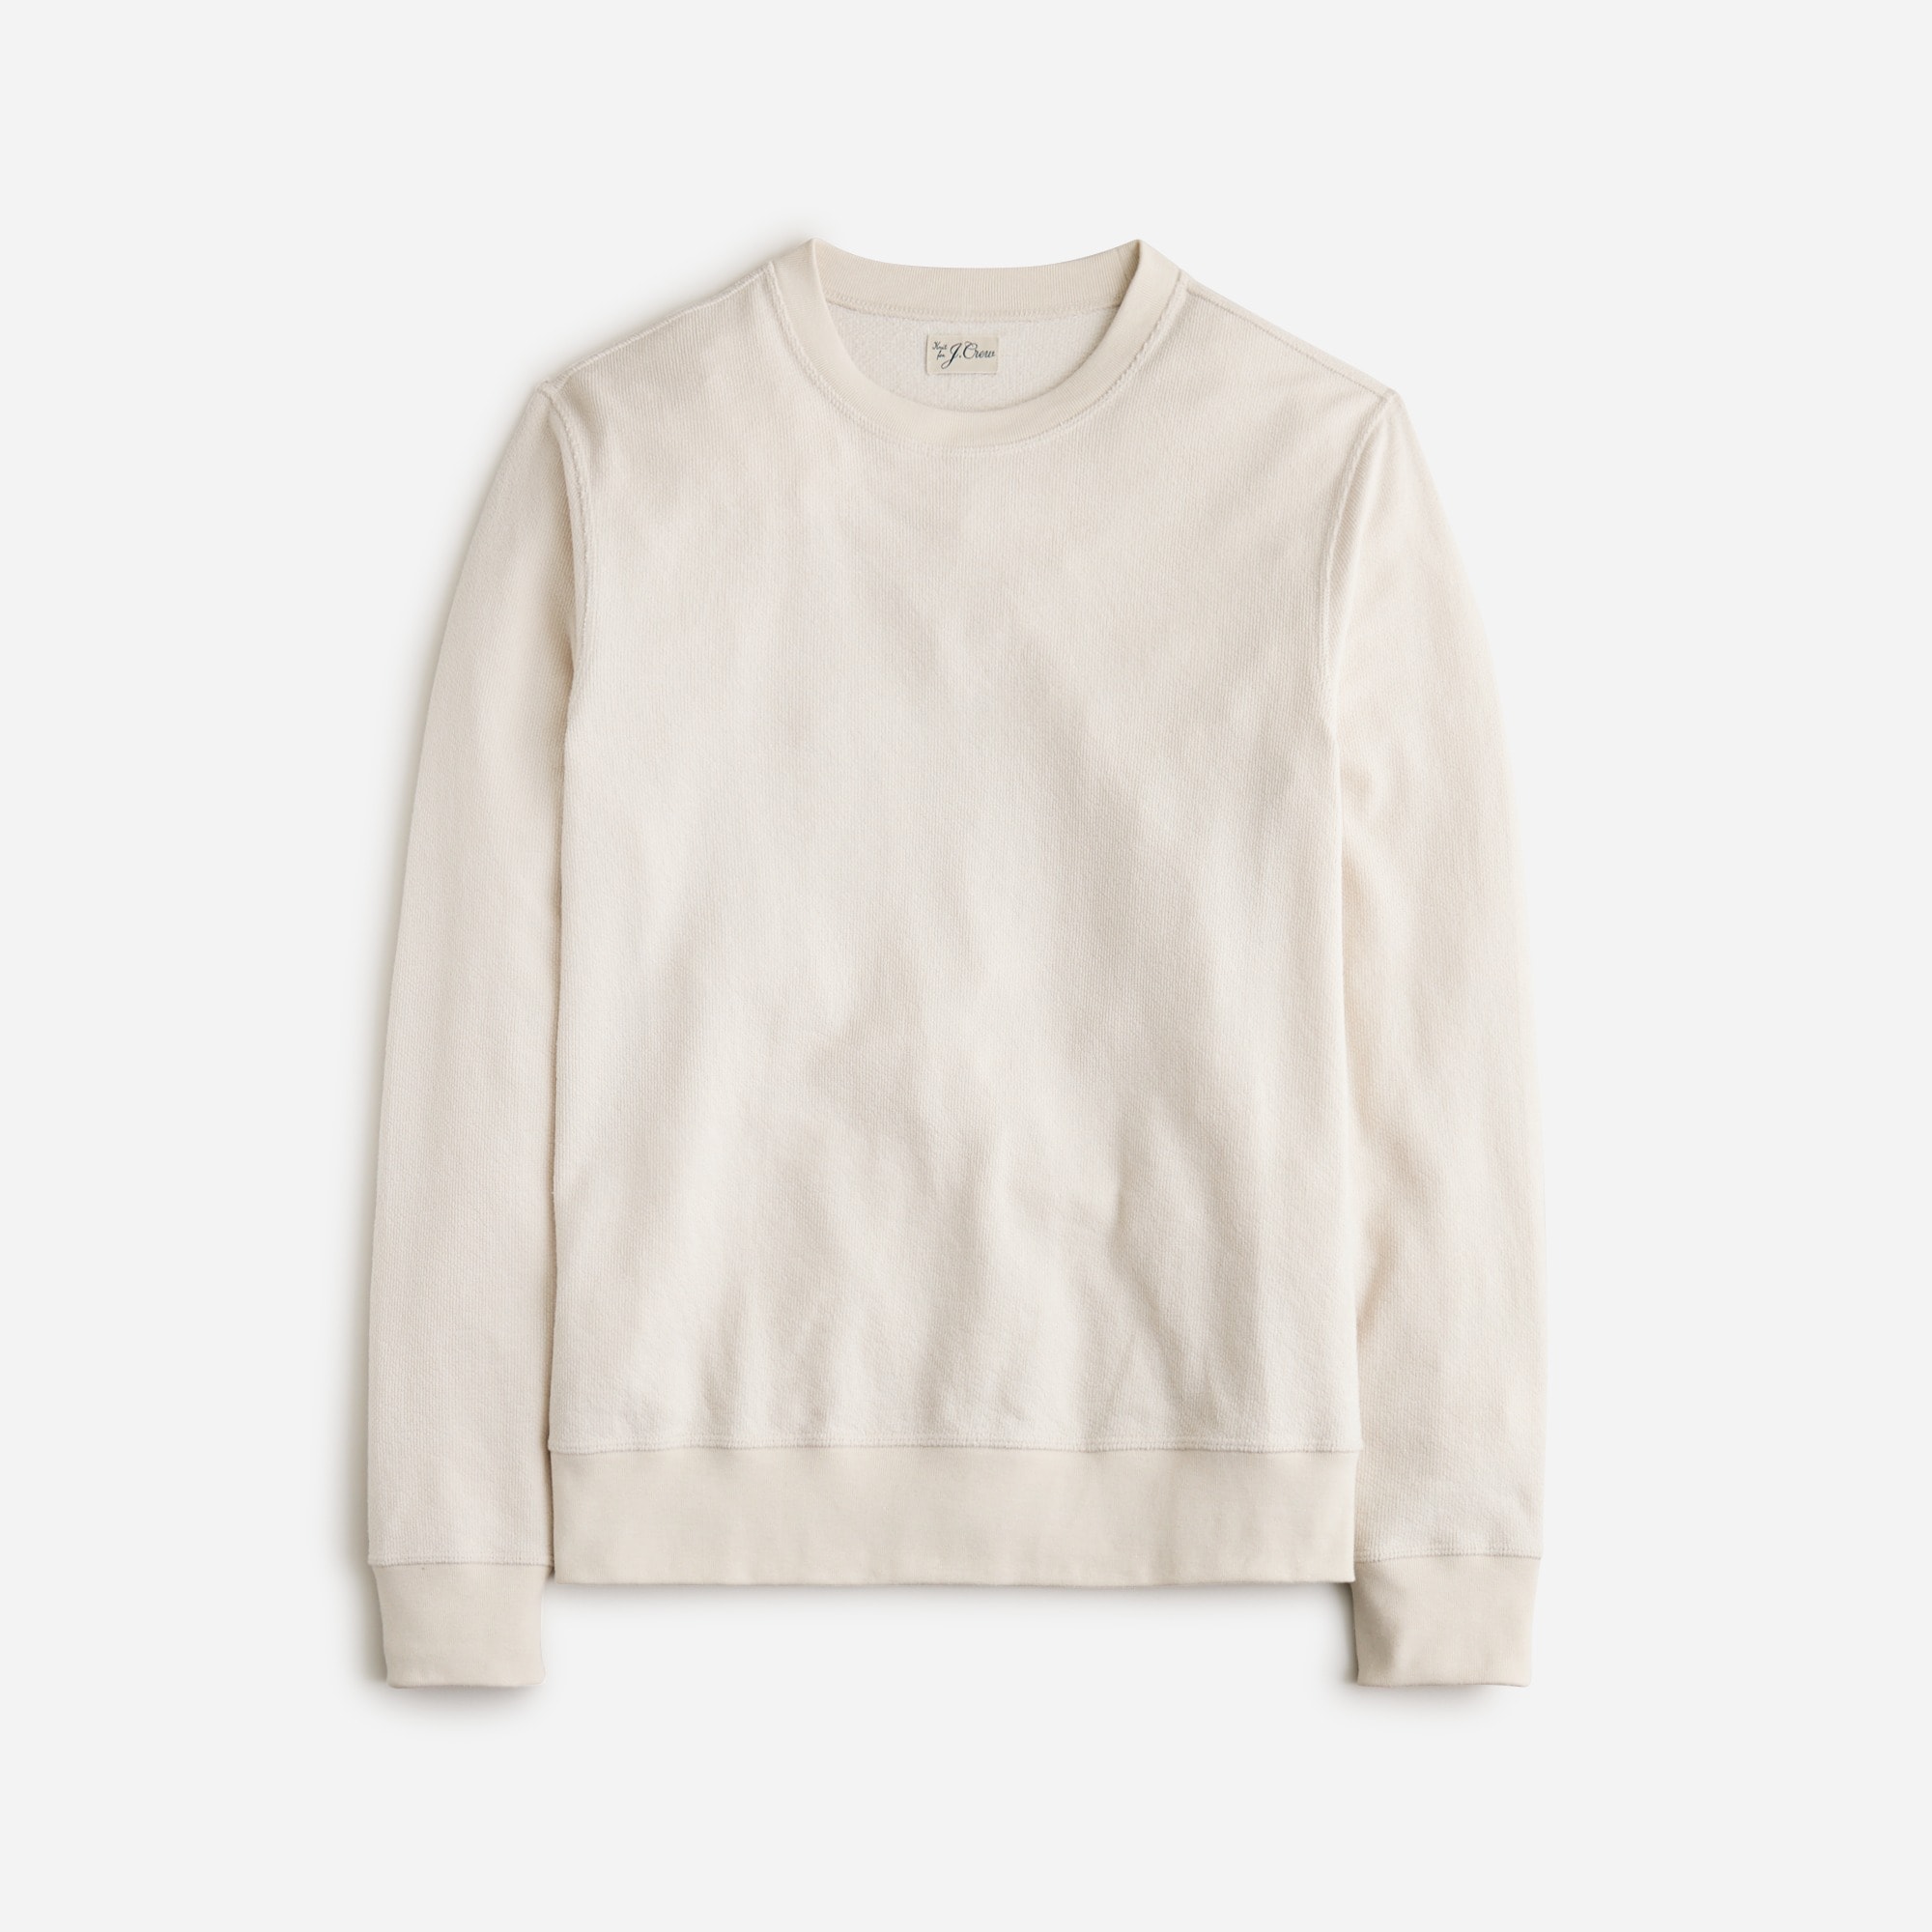 Jcrew Long-sleeve textured sweater-tee